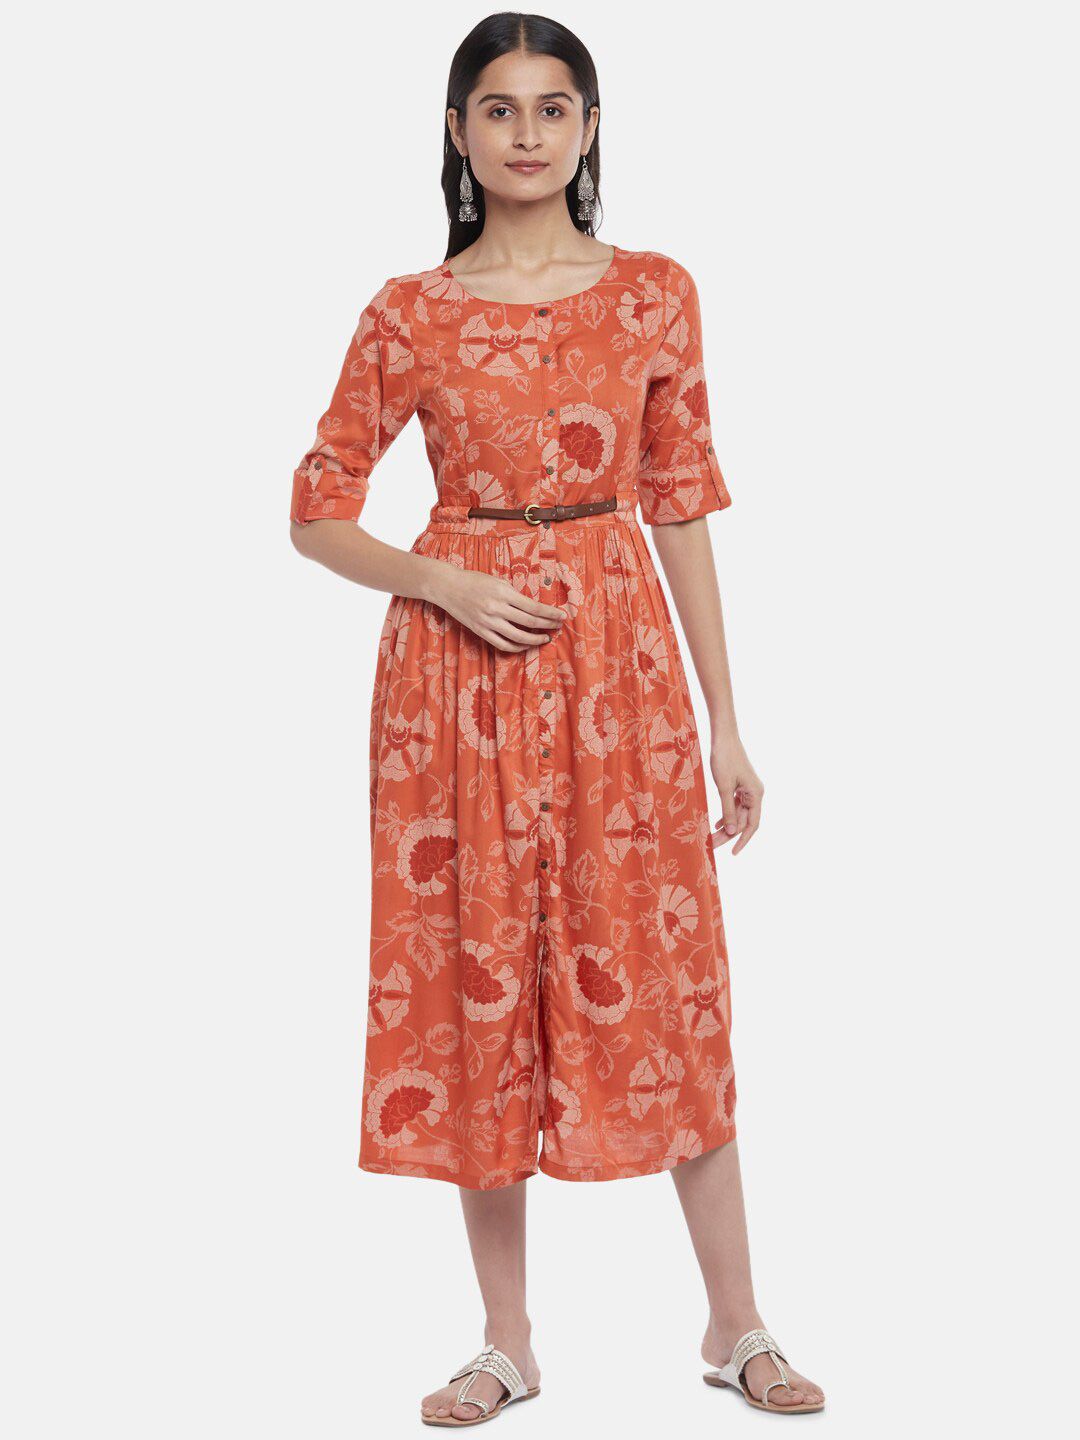 AKKRITI BY PANTALOONS Orange & Coral Ethnic Motifs Midi Dress Price in India